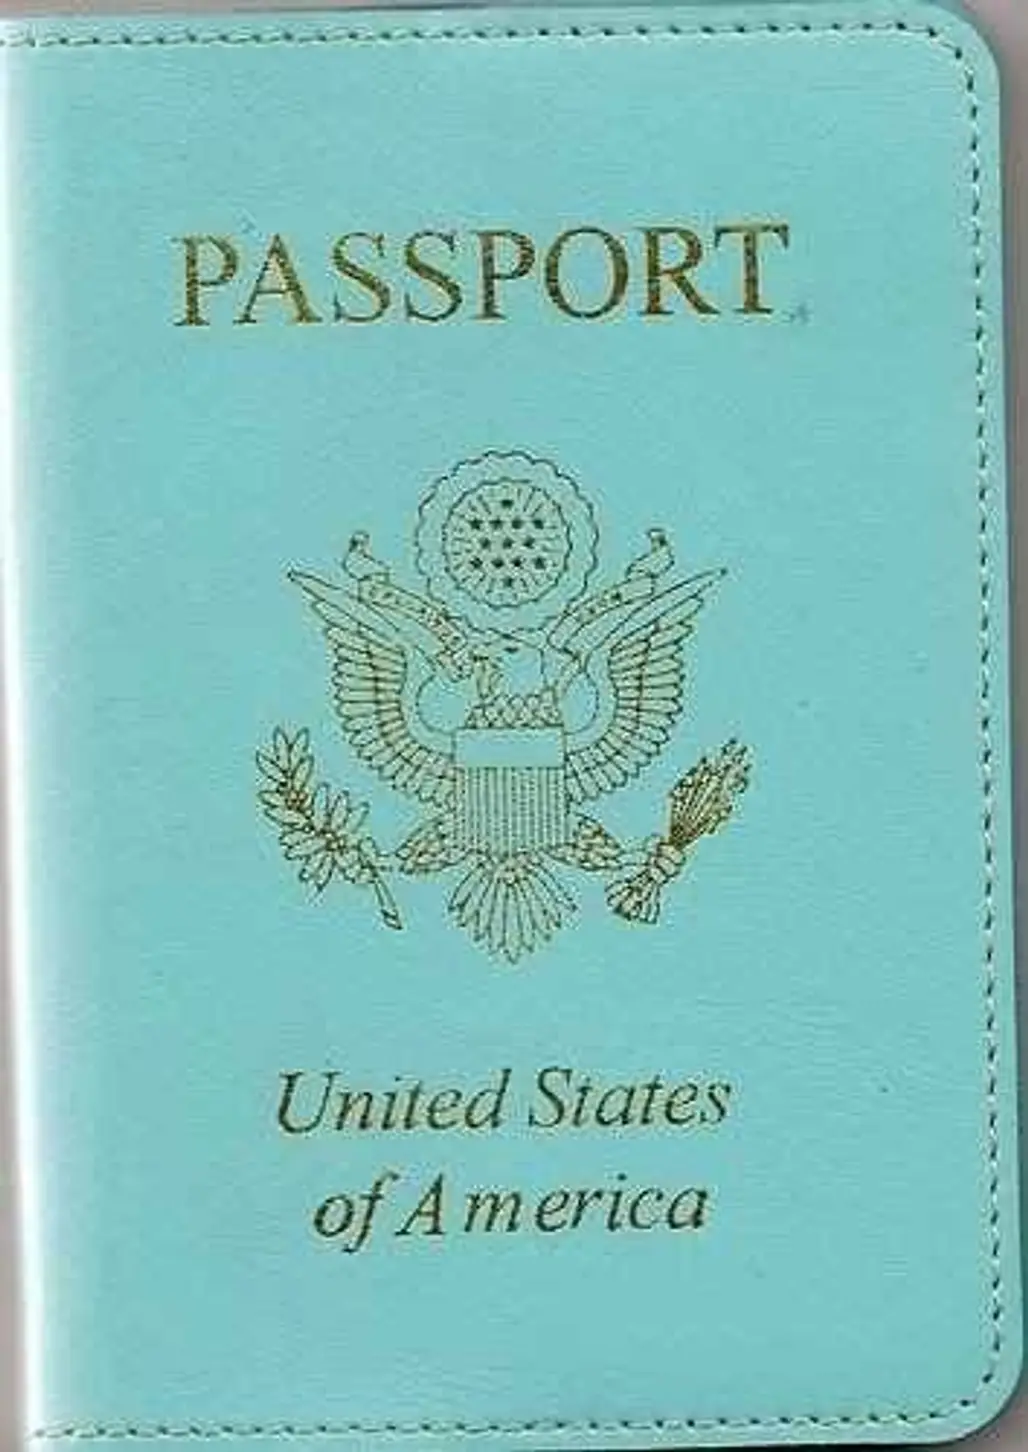 Tiffany Blue Passport Cover